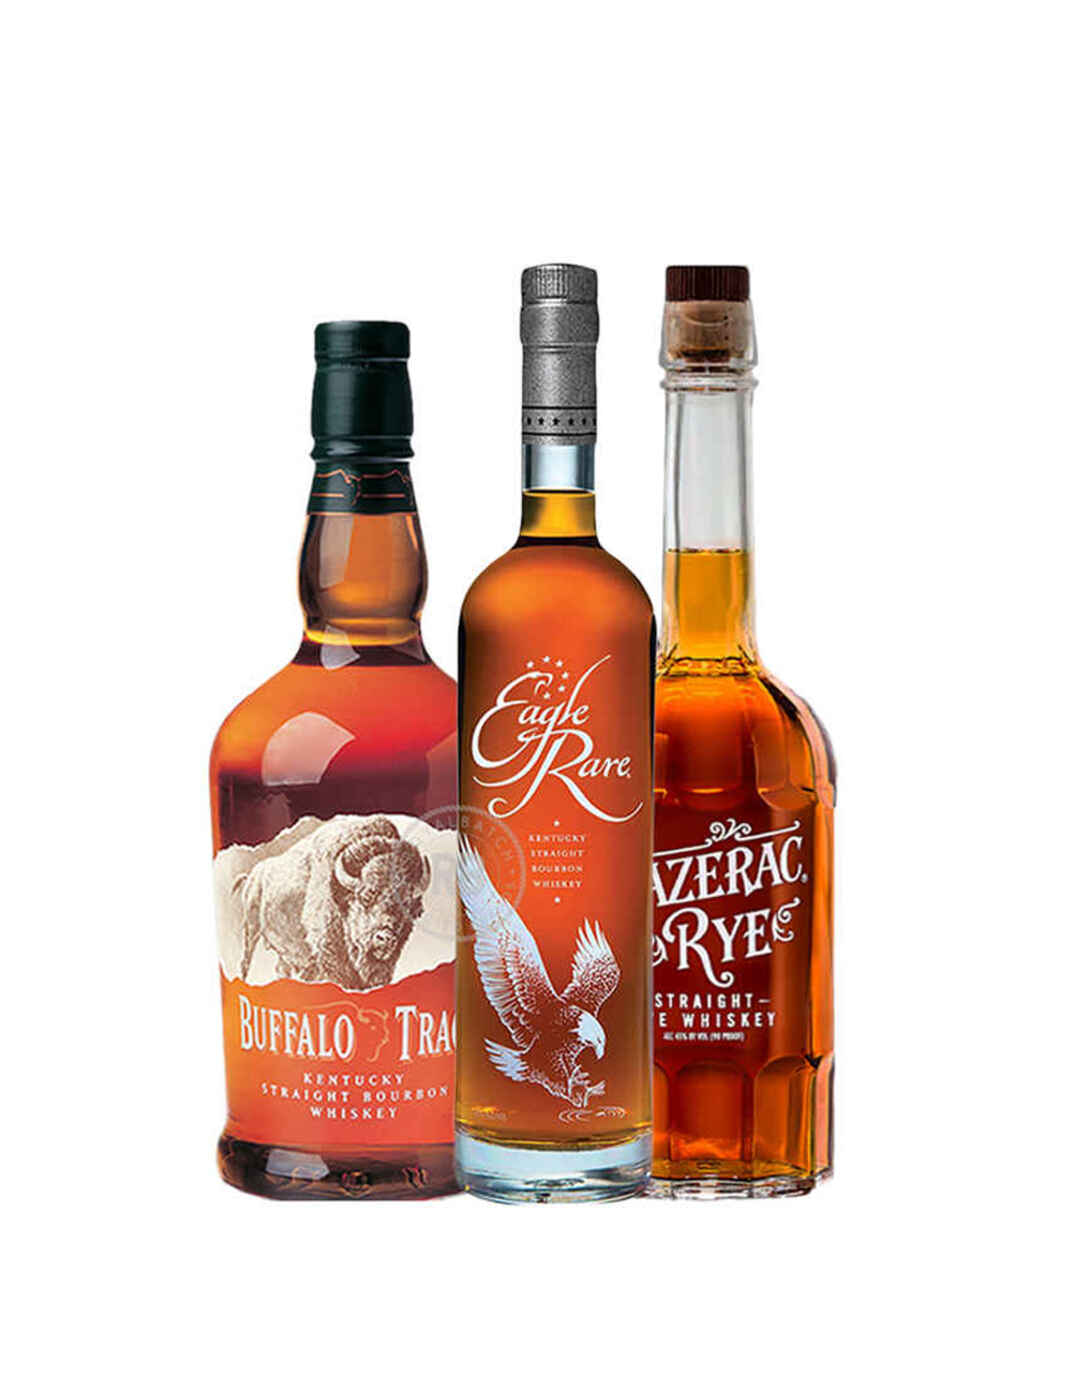 Buffalo Trace Bourbon + Eagle Rare Bourbon + Sazerac Rye Whiskey (3 Pack) Bundle #024